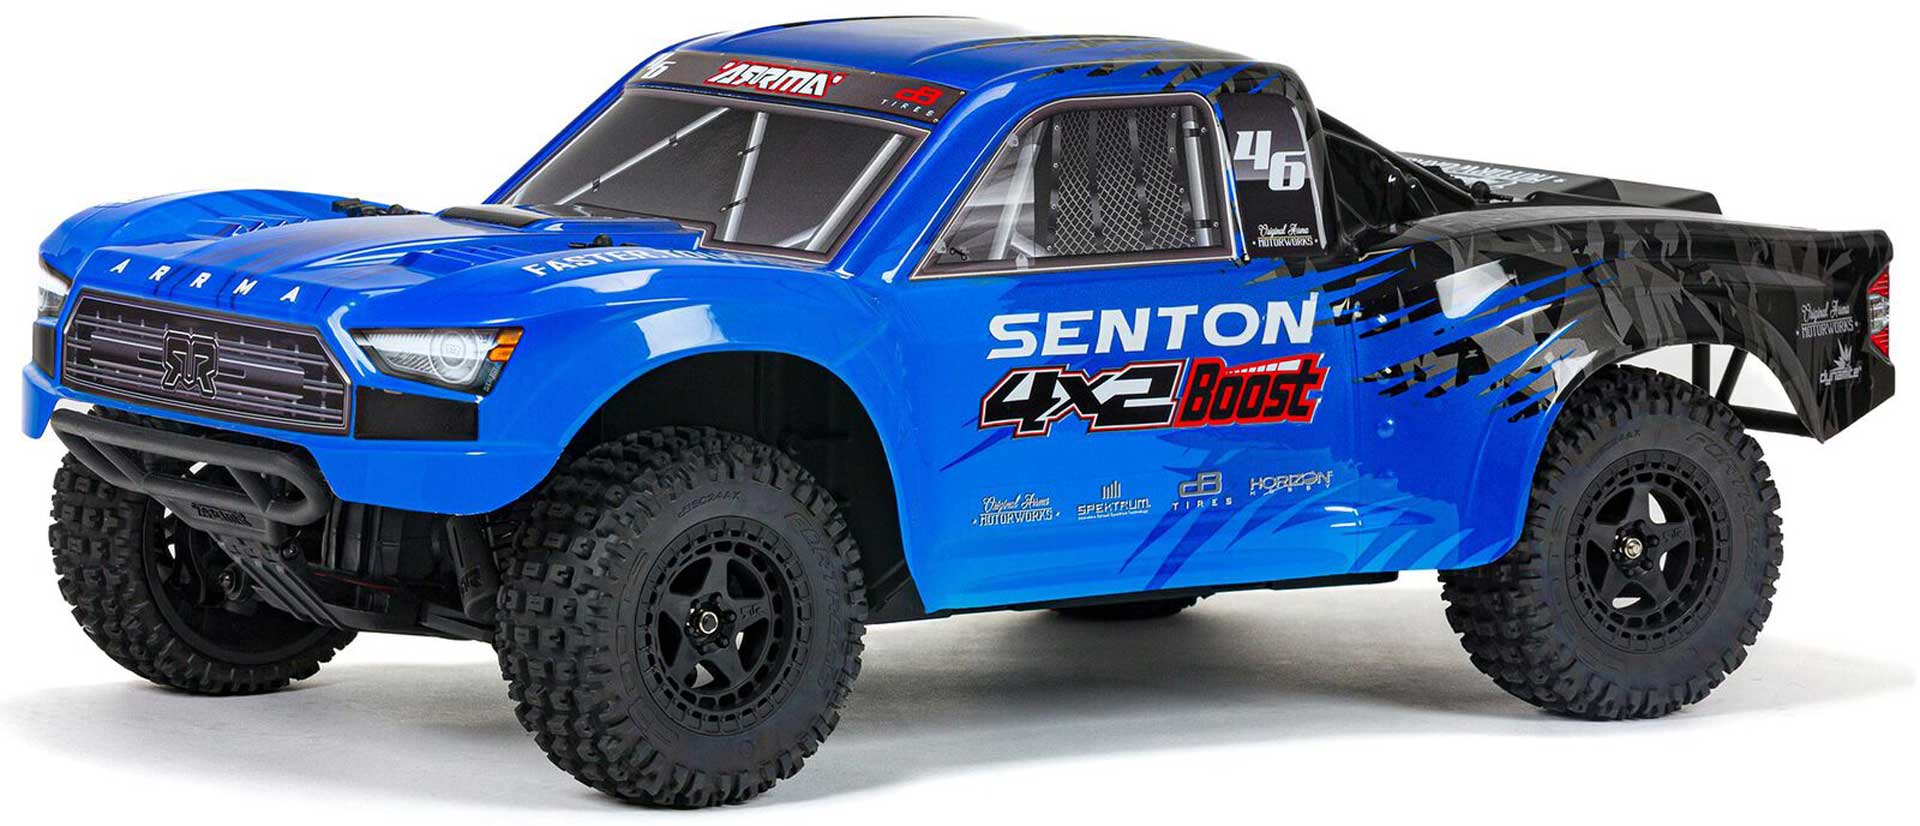 ARRMA SENTON BOOST 4X2 550 Mega 1/10 2WD SC blau/schwarz ohne Akku/Lader